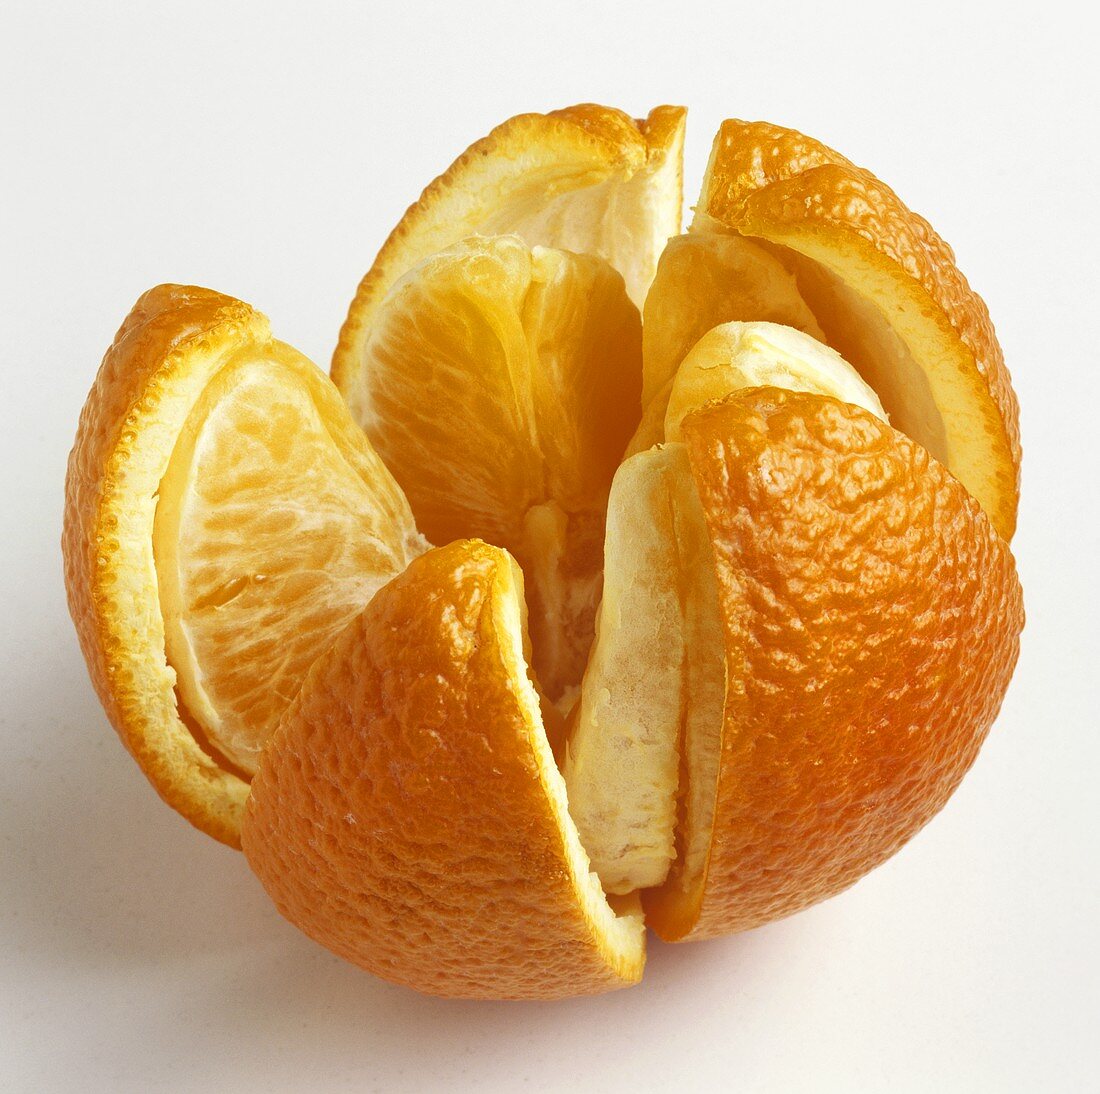 Orange, cut into wedges